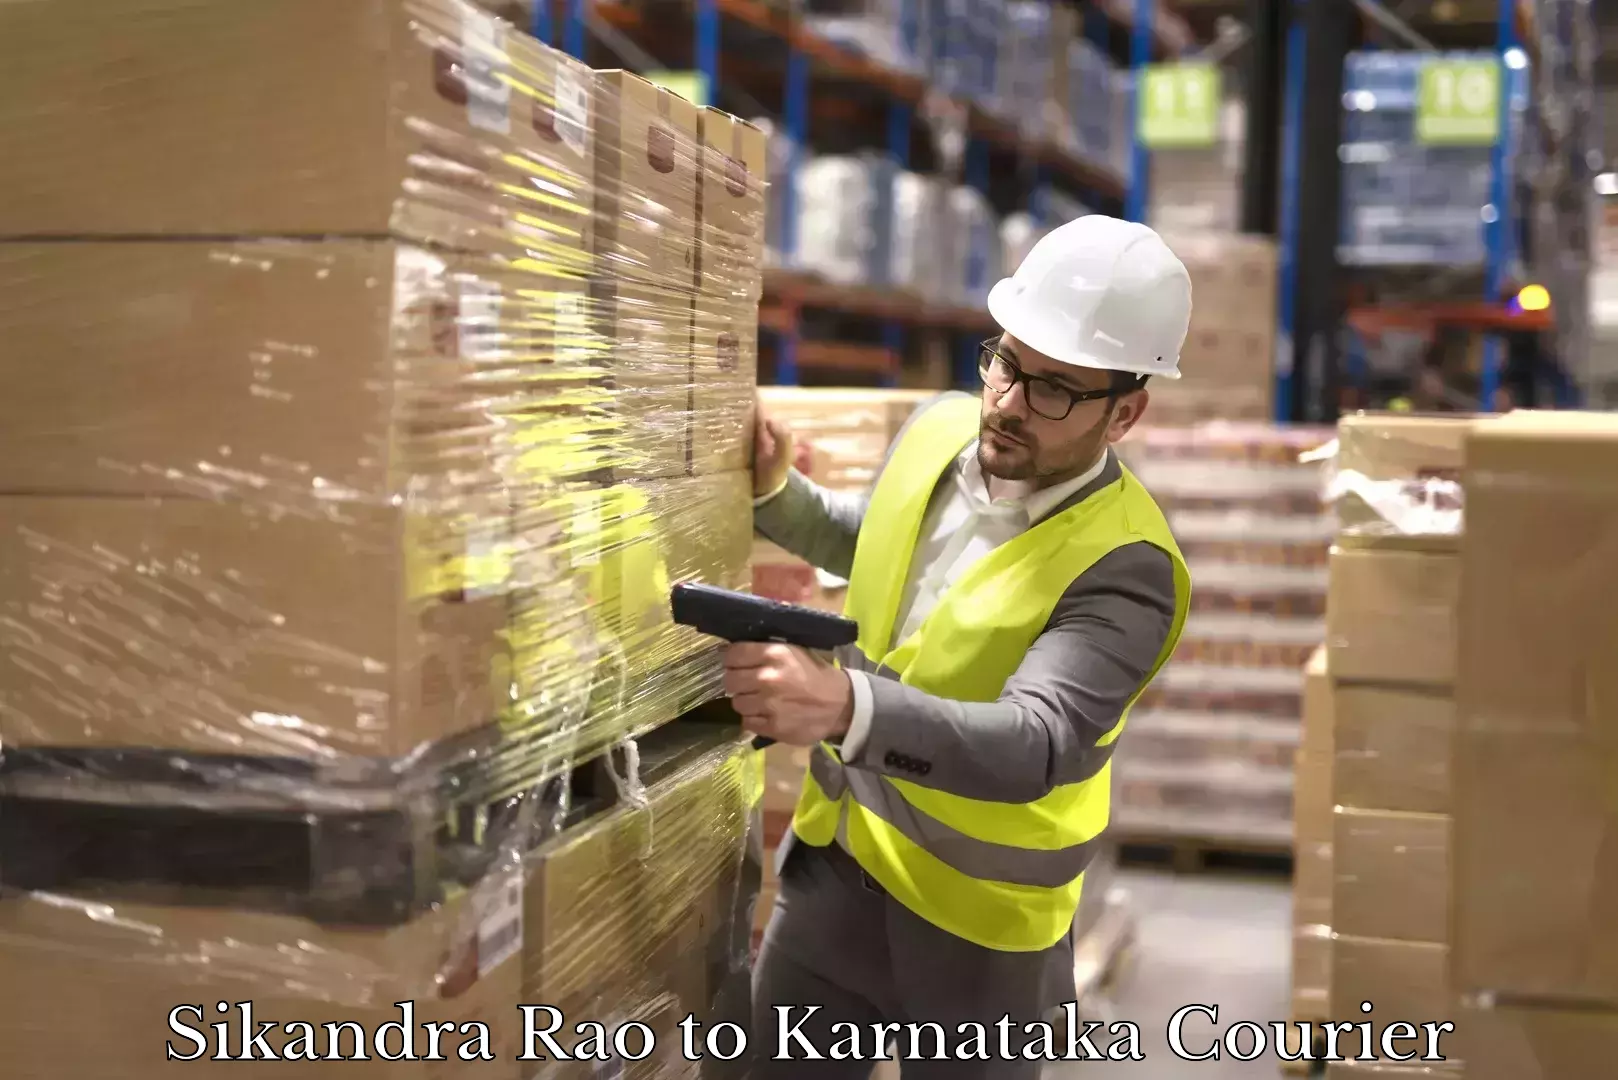 Quick dispatch service Sikandra Rao to Karnataka